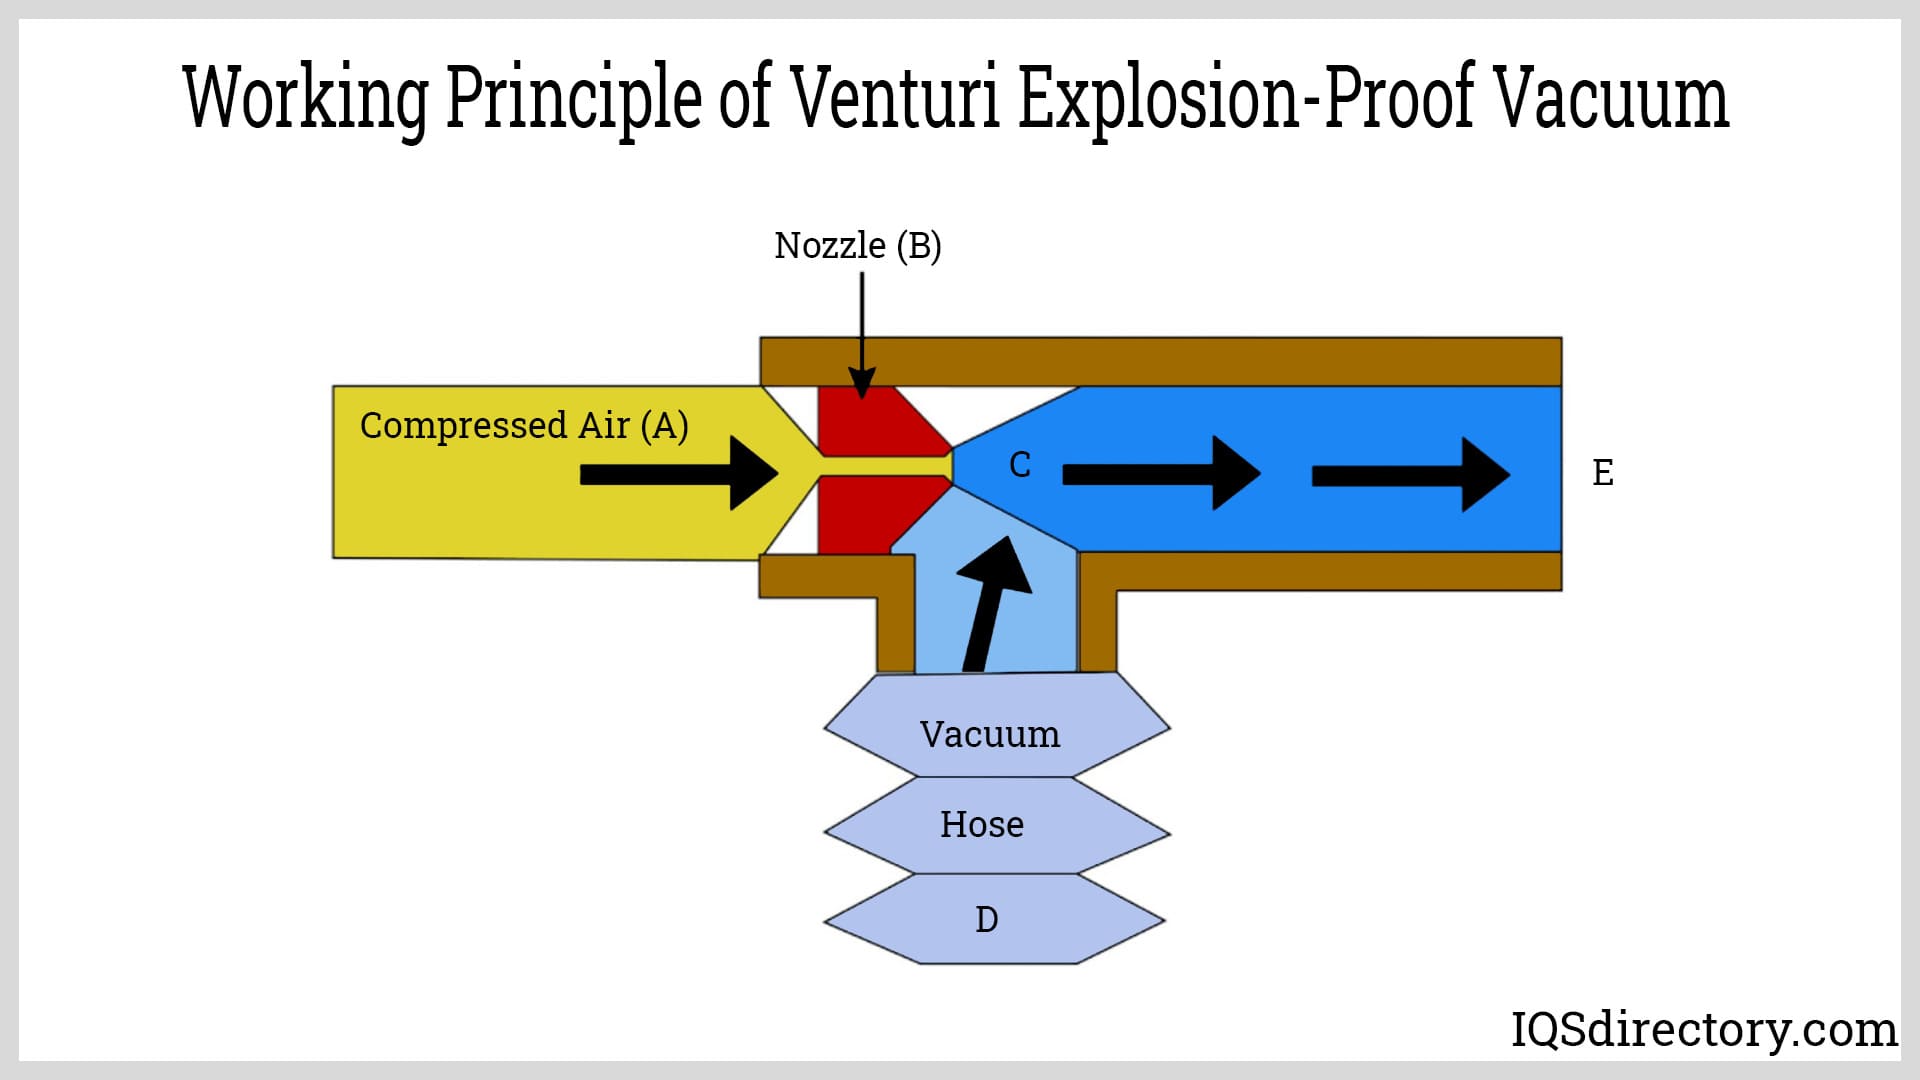 Working Principle of Explosion-Proof Vacuum